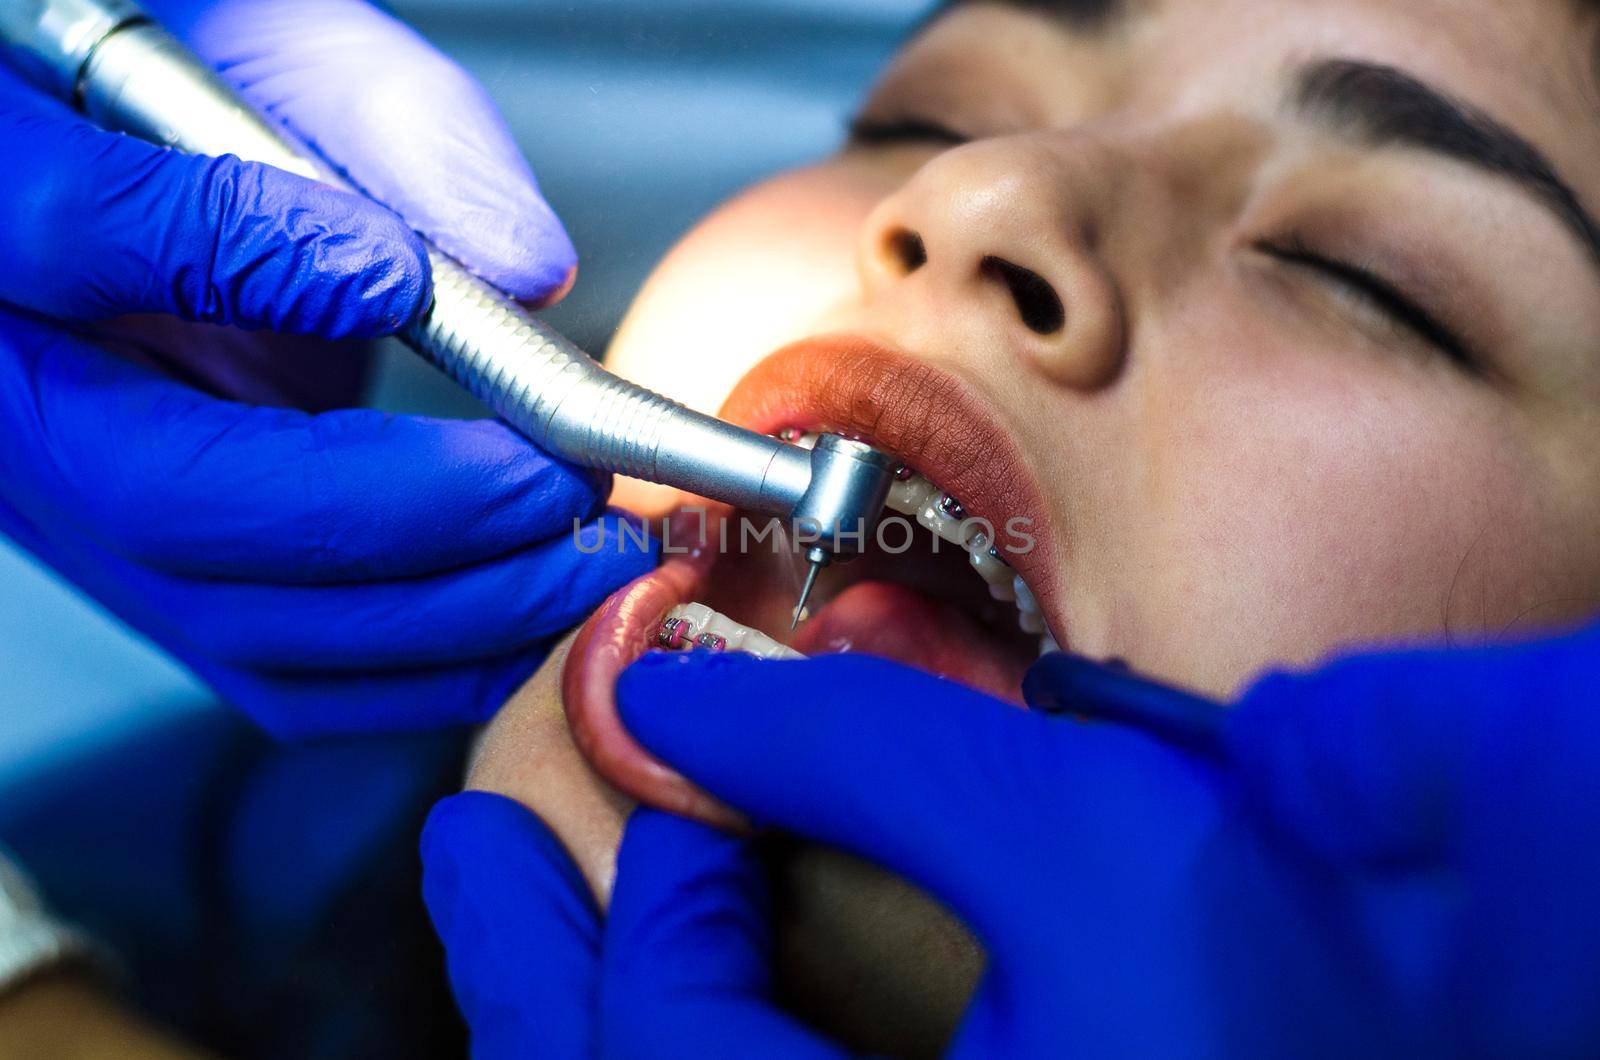 Female patient at dental procedure using dental drill in modern dental clinic